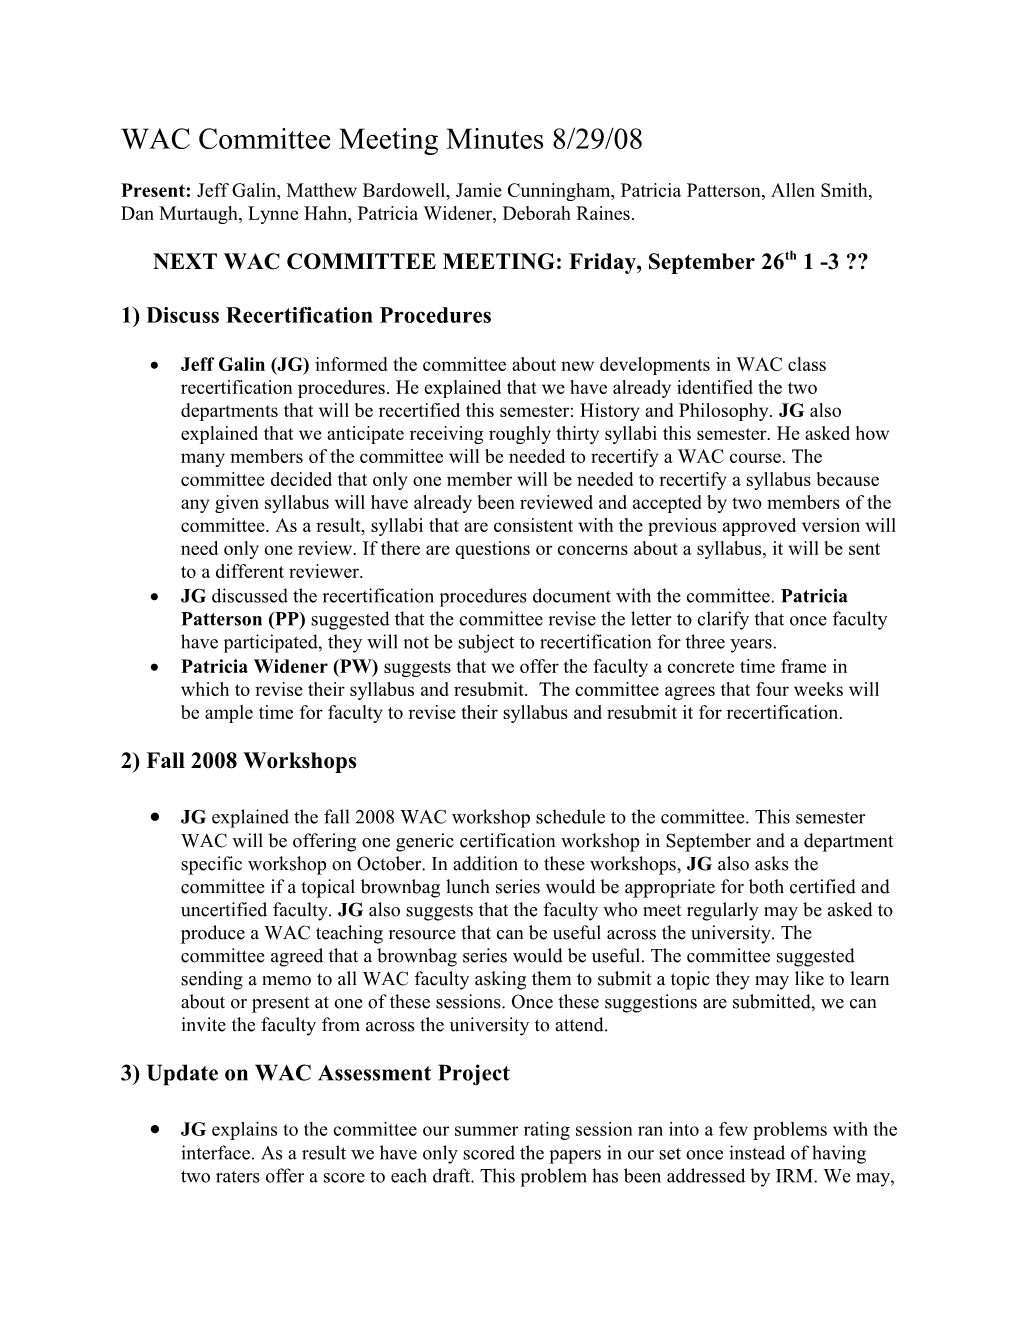 WAC Committee Meeting Minutes 3/21/08